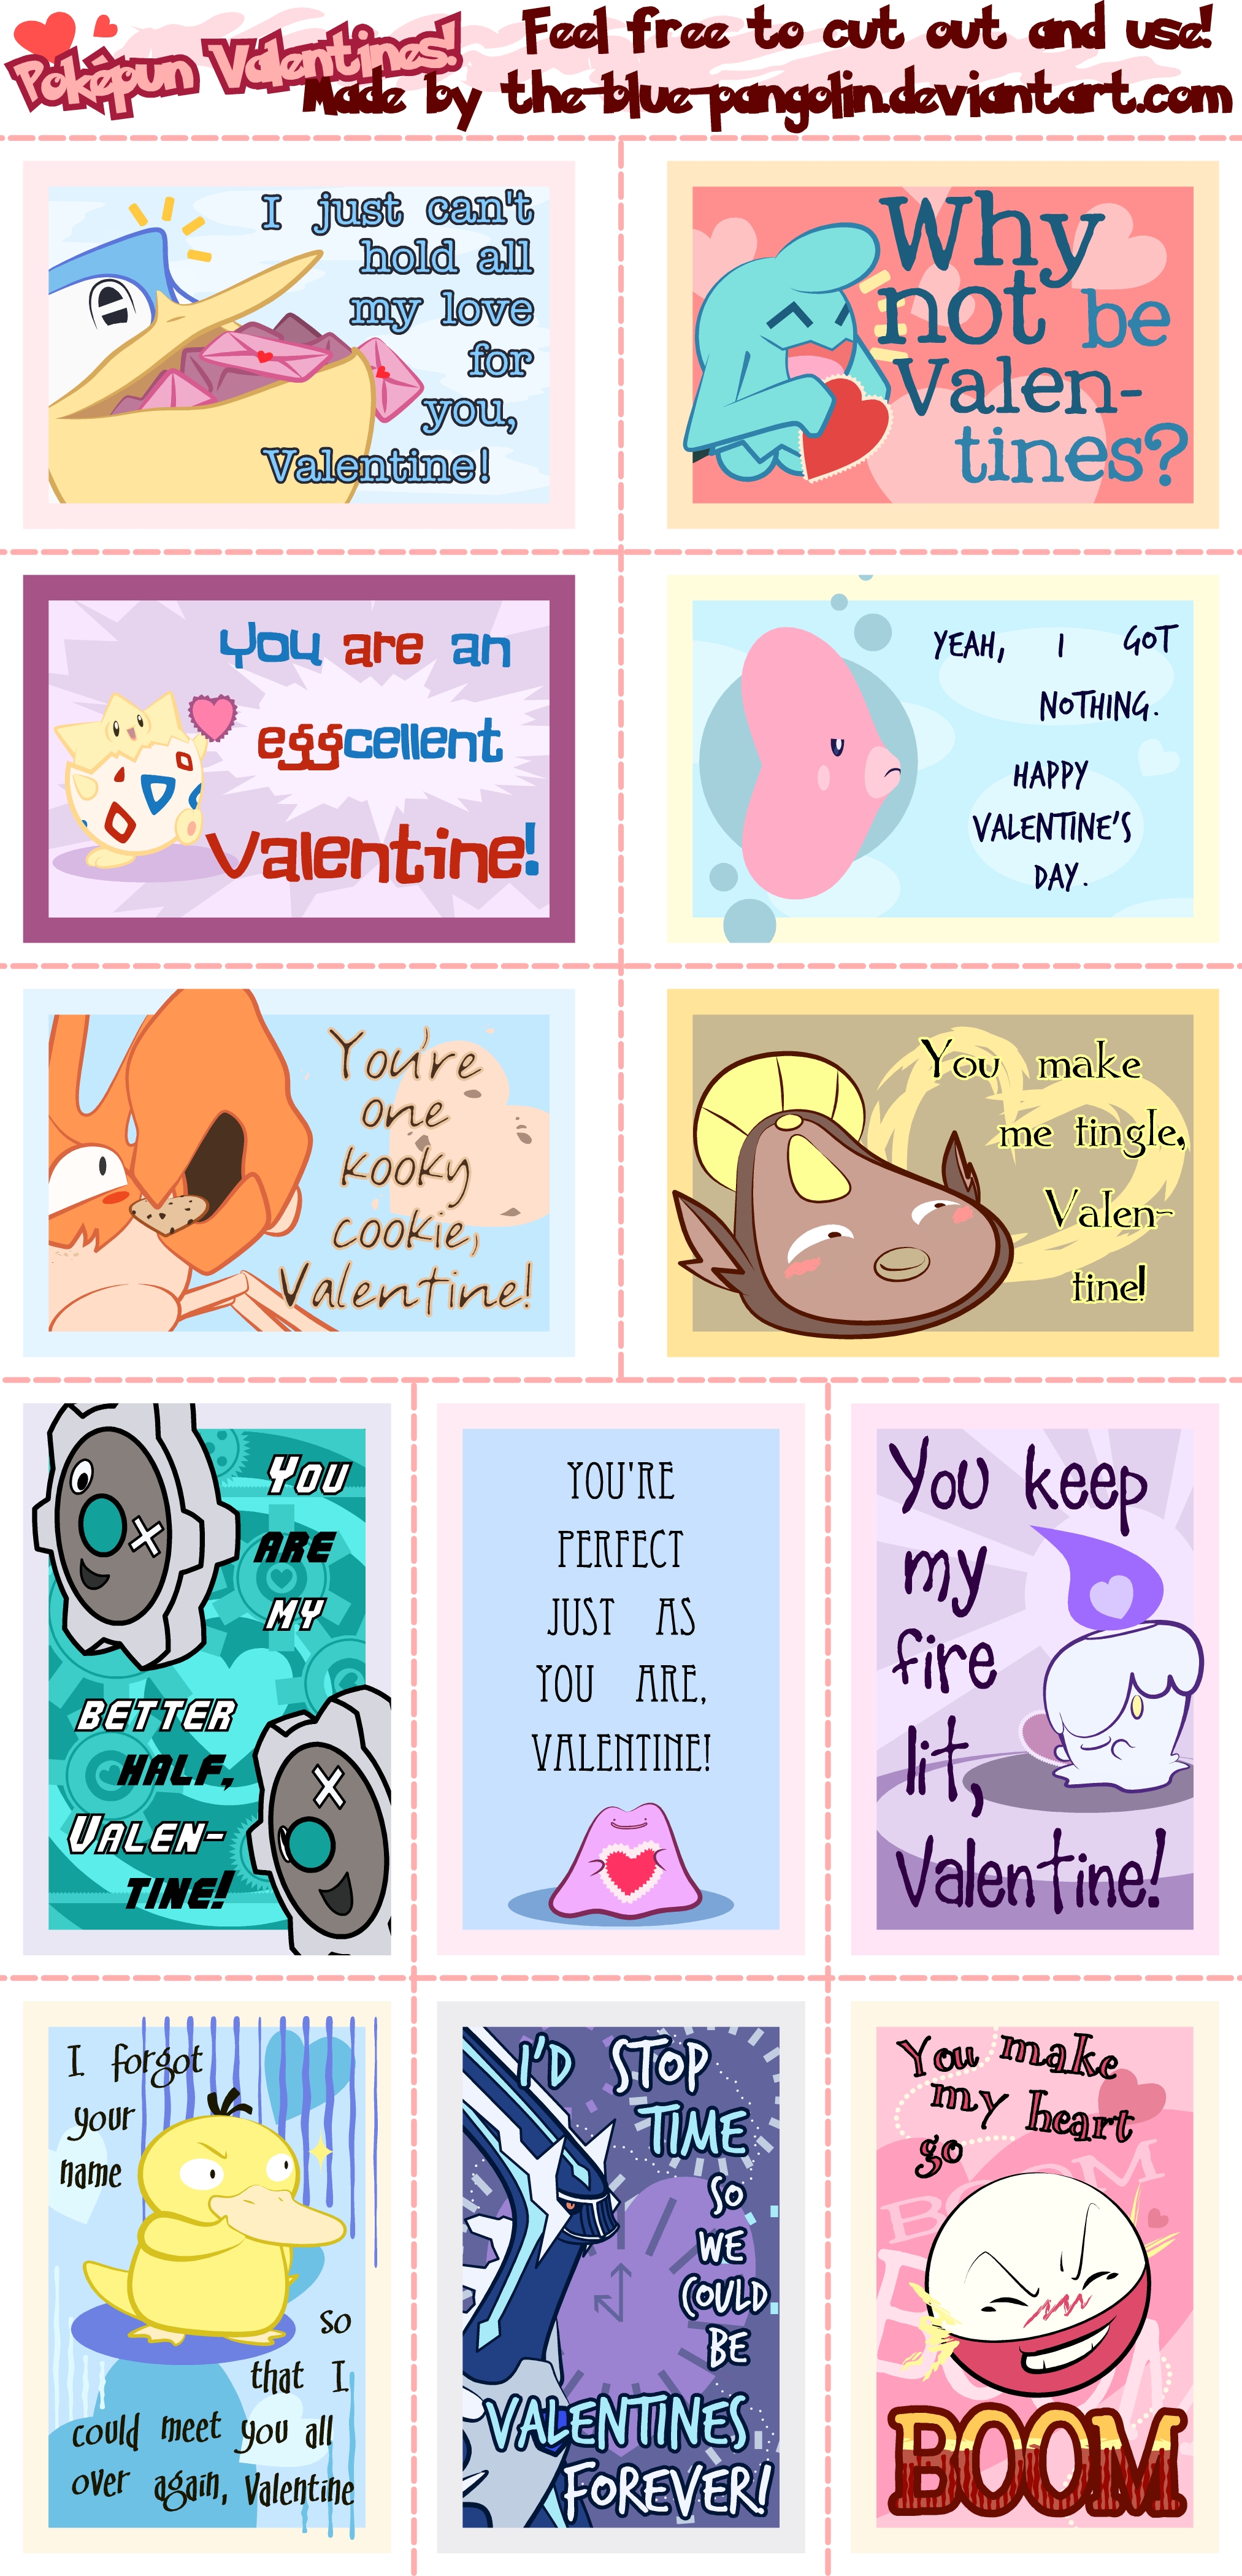 pokemon-valentines-2013-by-the-blue-pangolin-on-deviantart